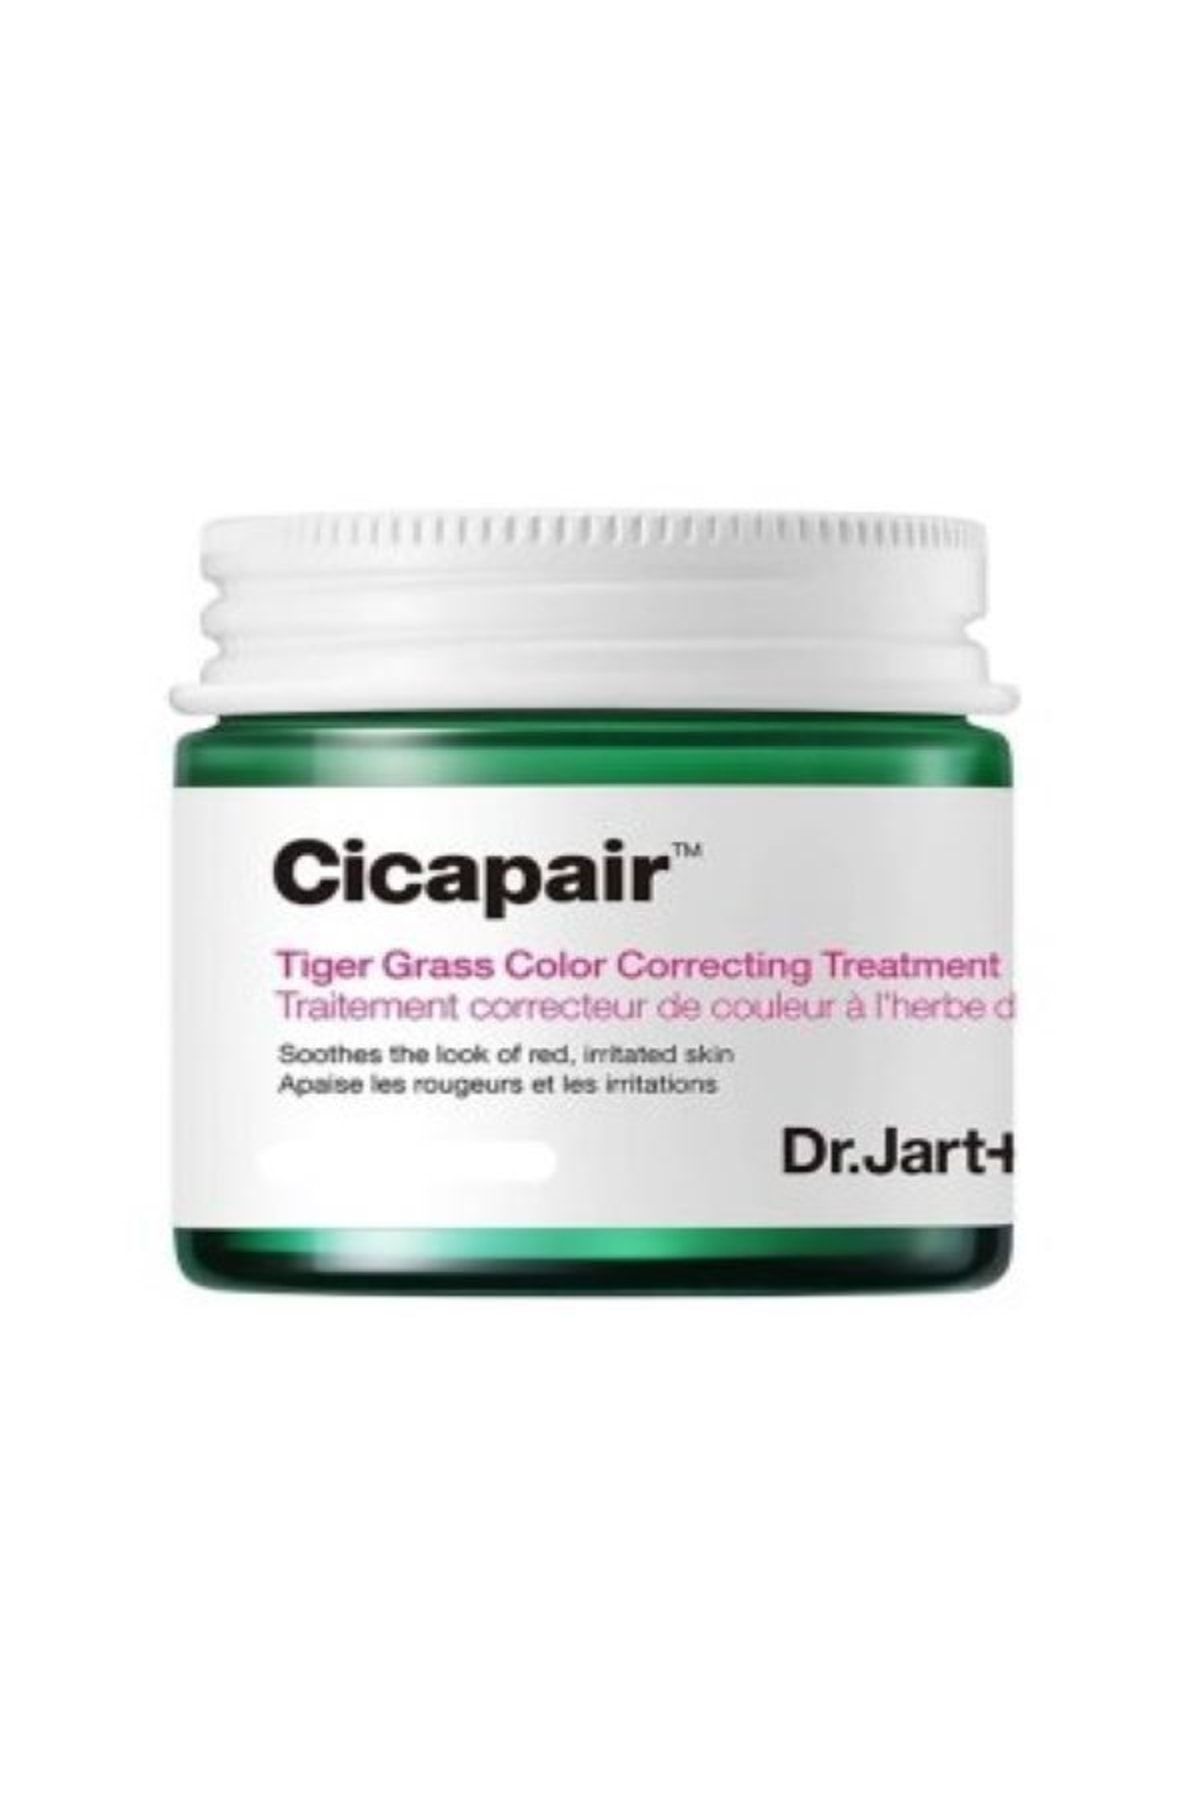 Dr. Jart+ Dr.jart+ Cicapair Tiger Grass Color Treatment Cilt Tonu Eşitleyici Bakım Kremi 30 Mshopping Fashions